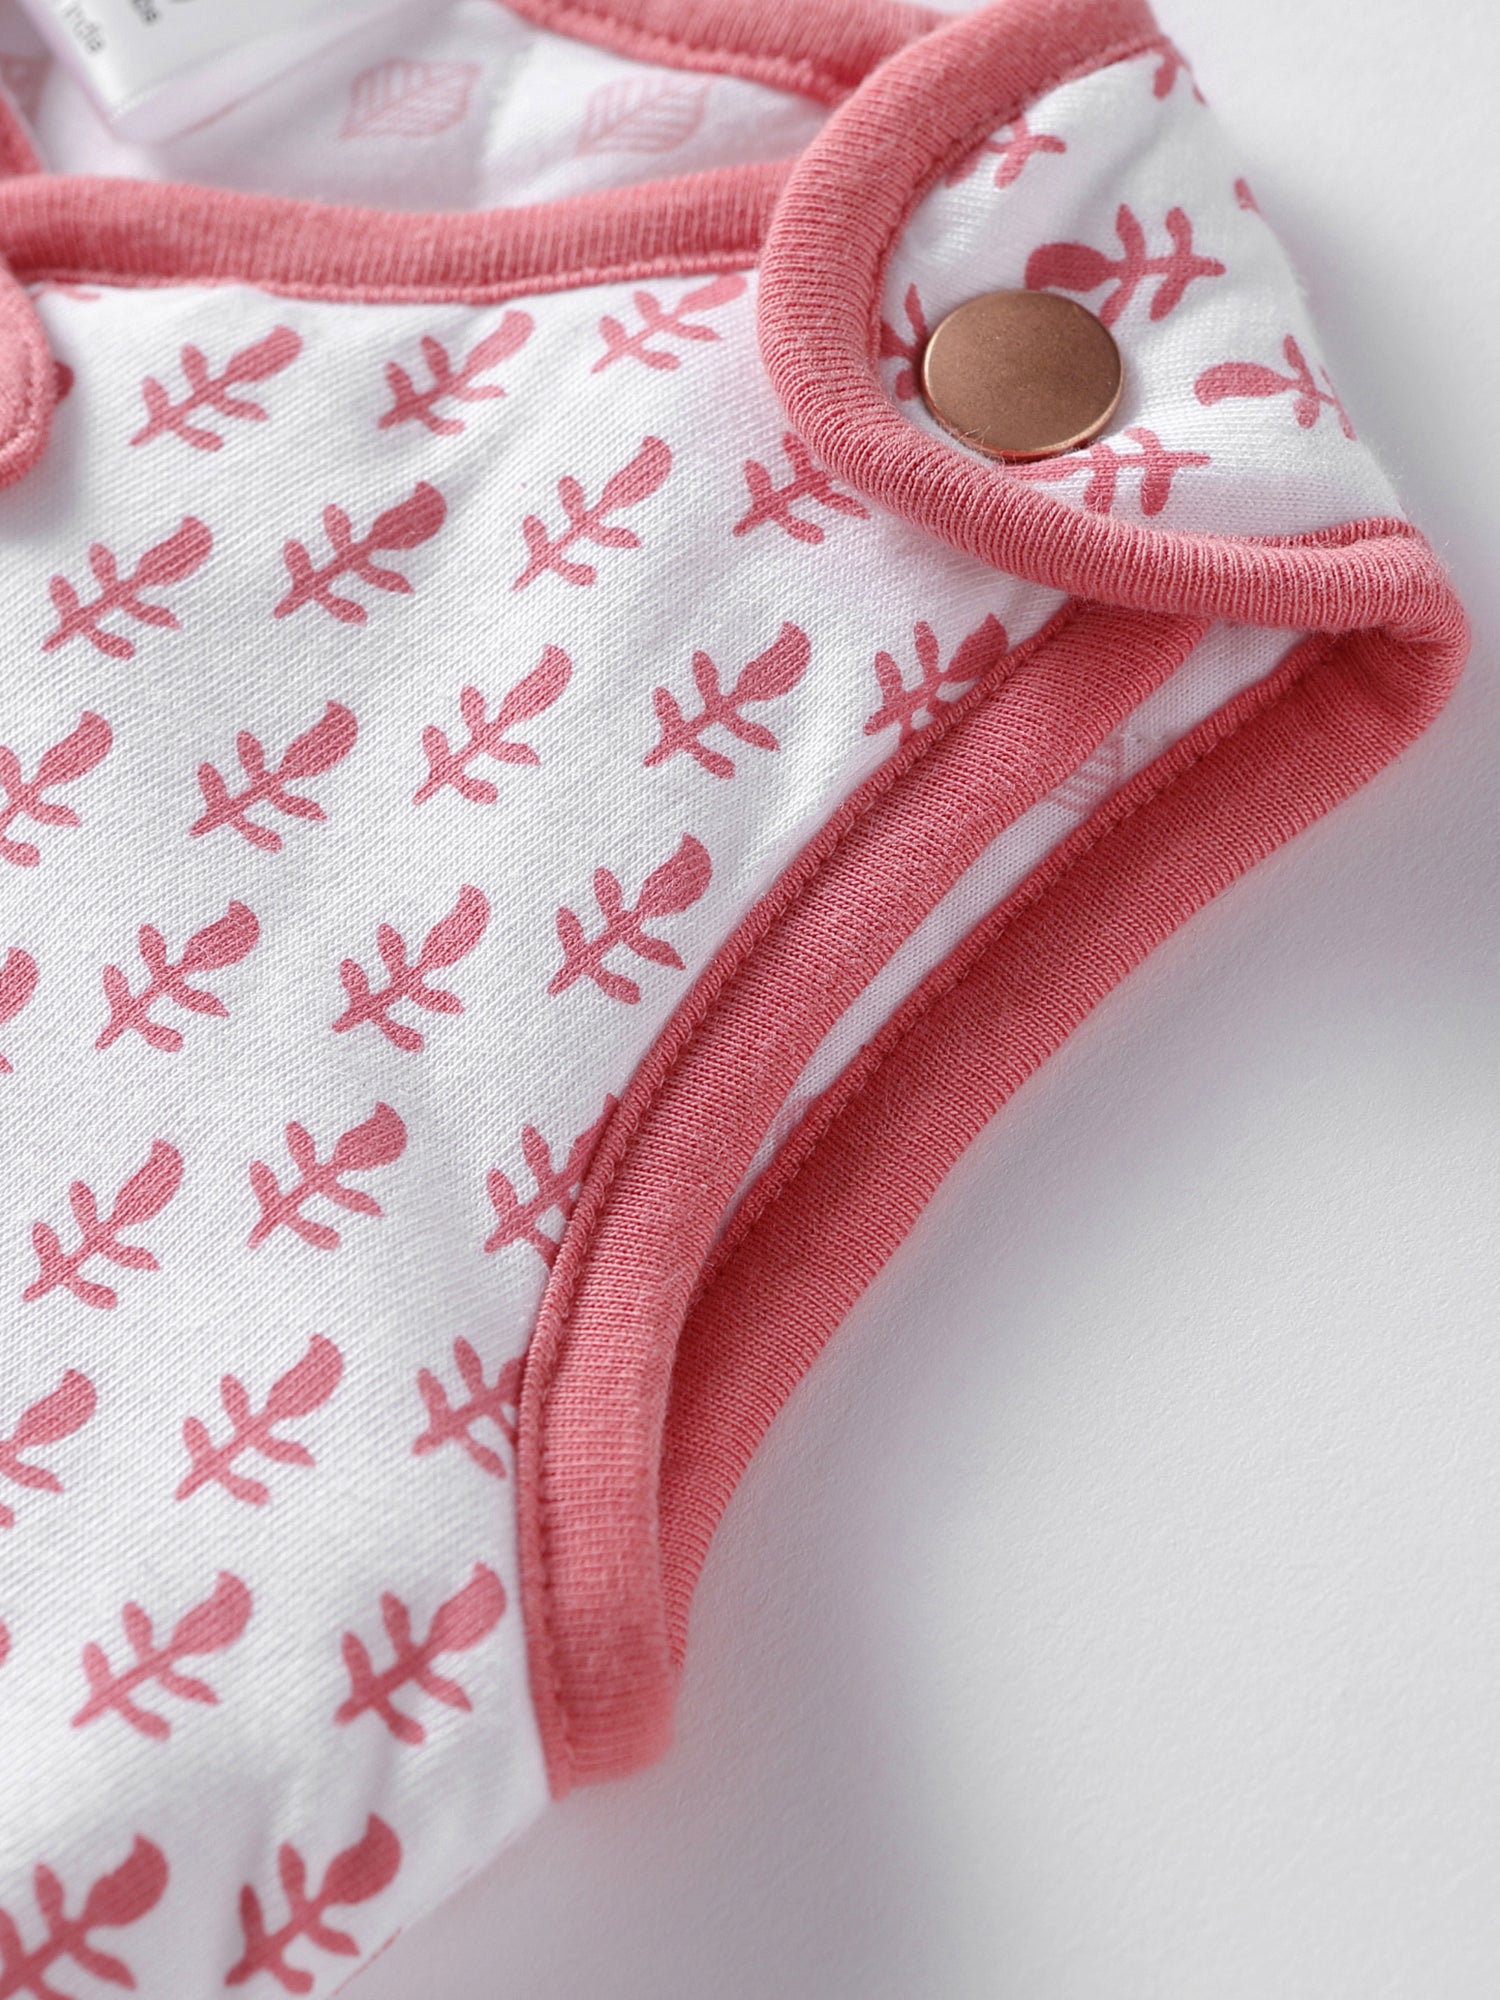 TOG 0.6 (Lightweight) - Pink City Wearable Baby Sleep Bag